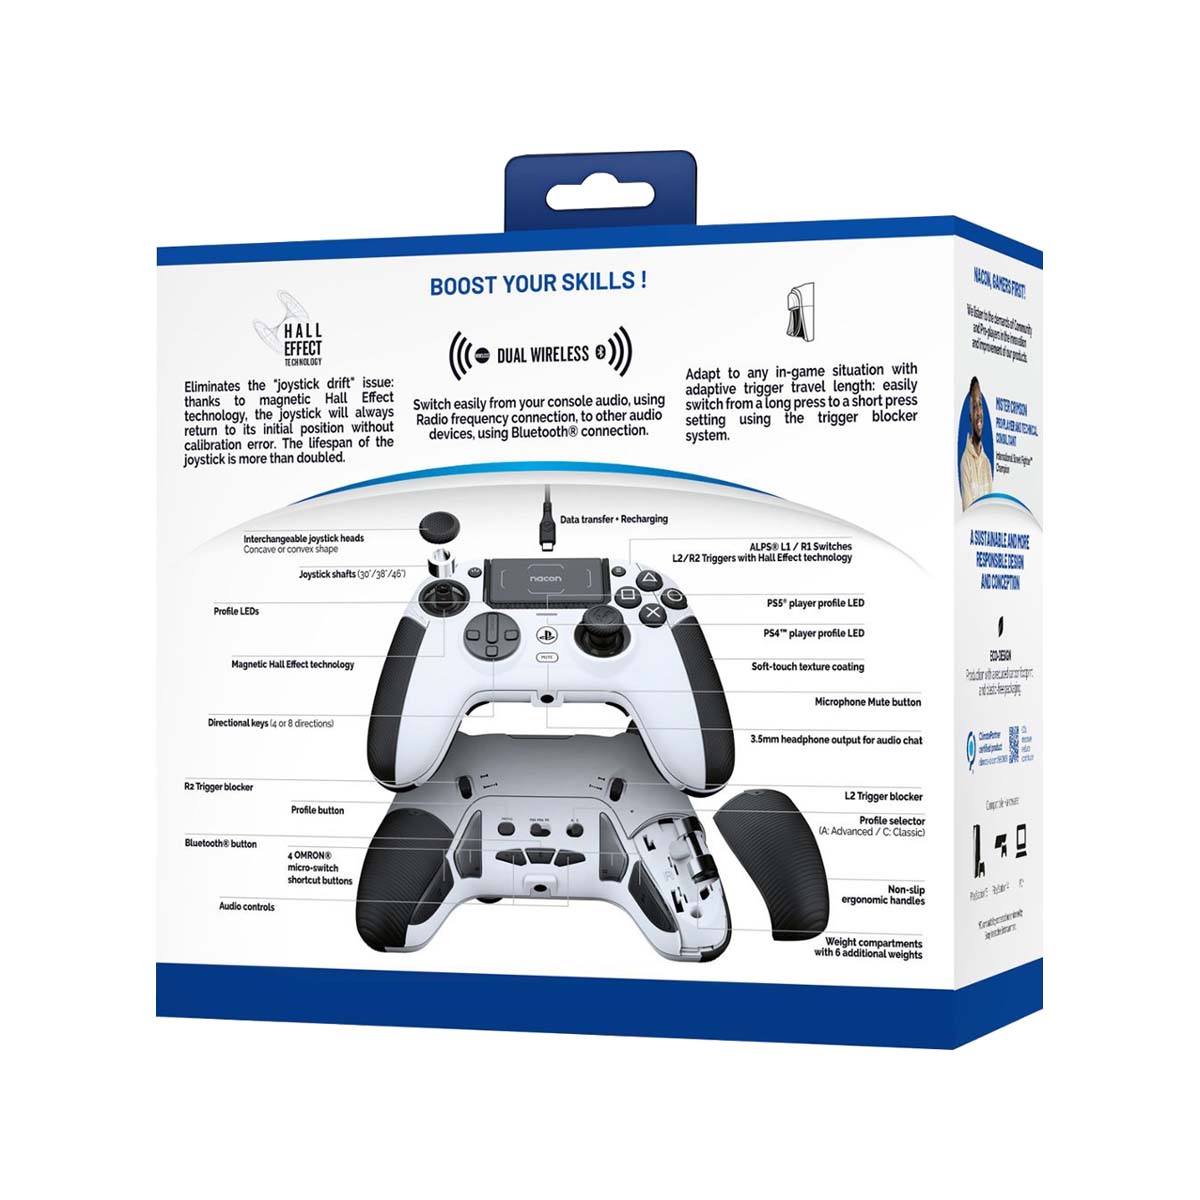 Nacon PS5 Revolution Pro 5 Gaming Controller (White)